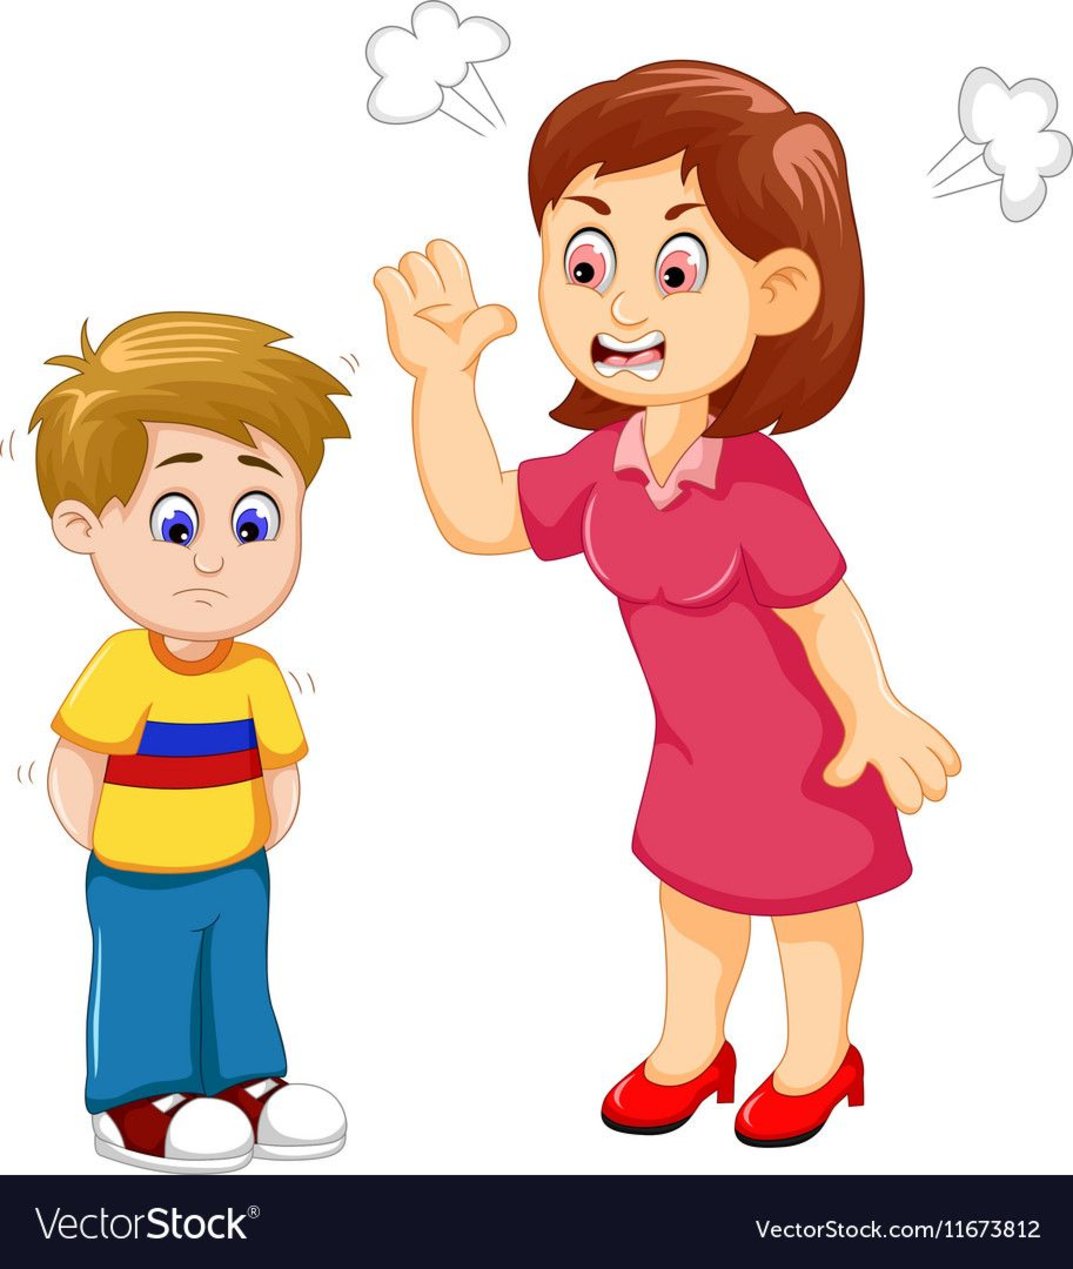 parent scolding child clipart thinking